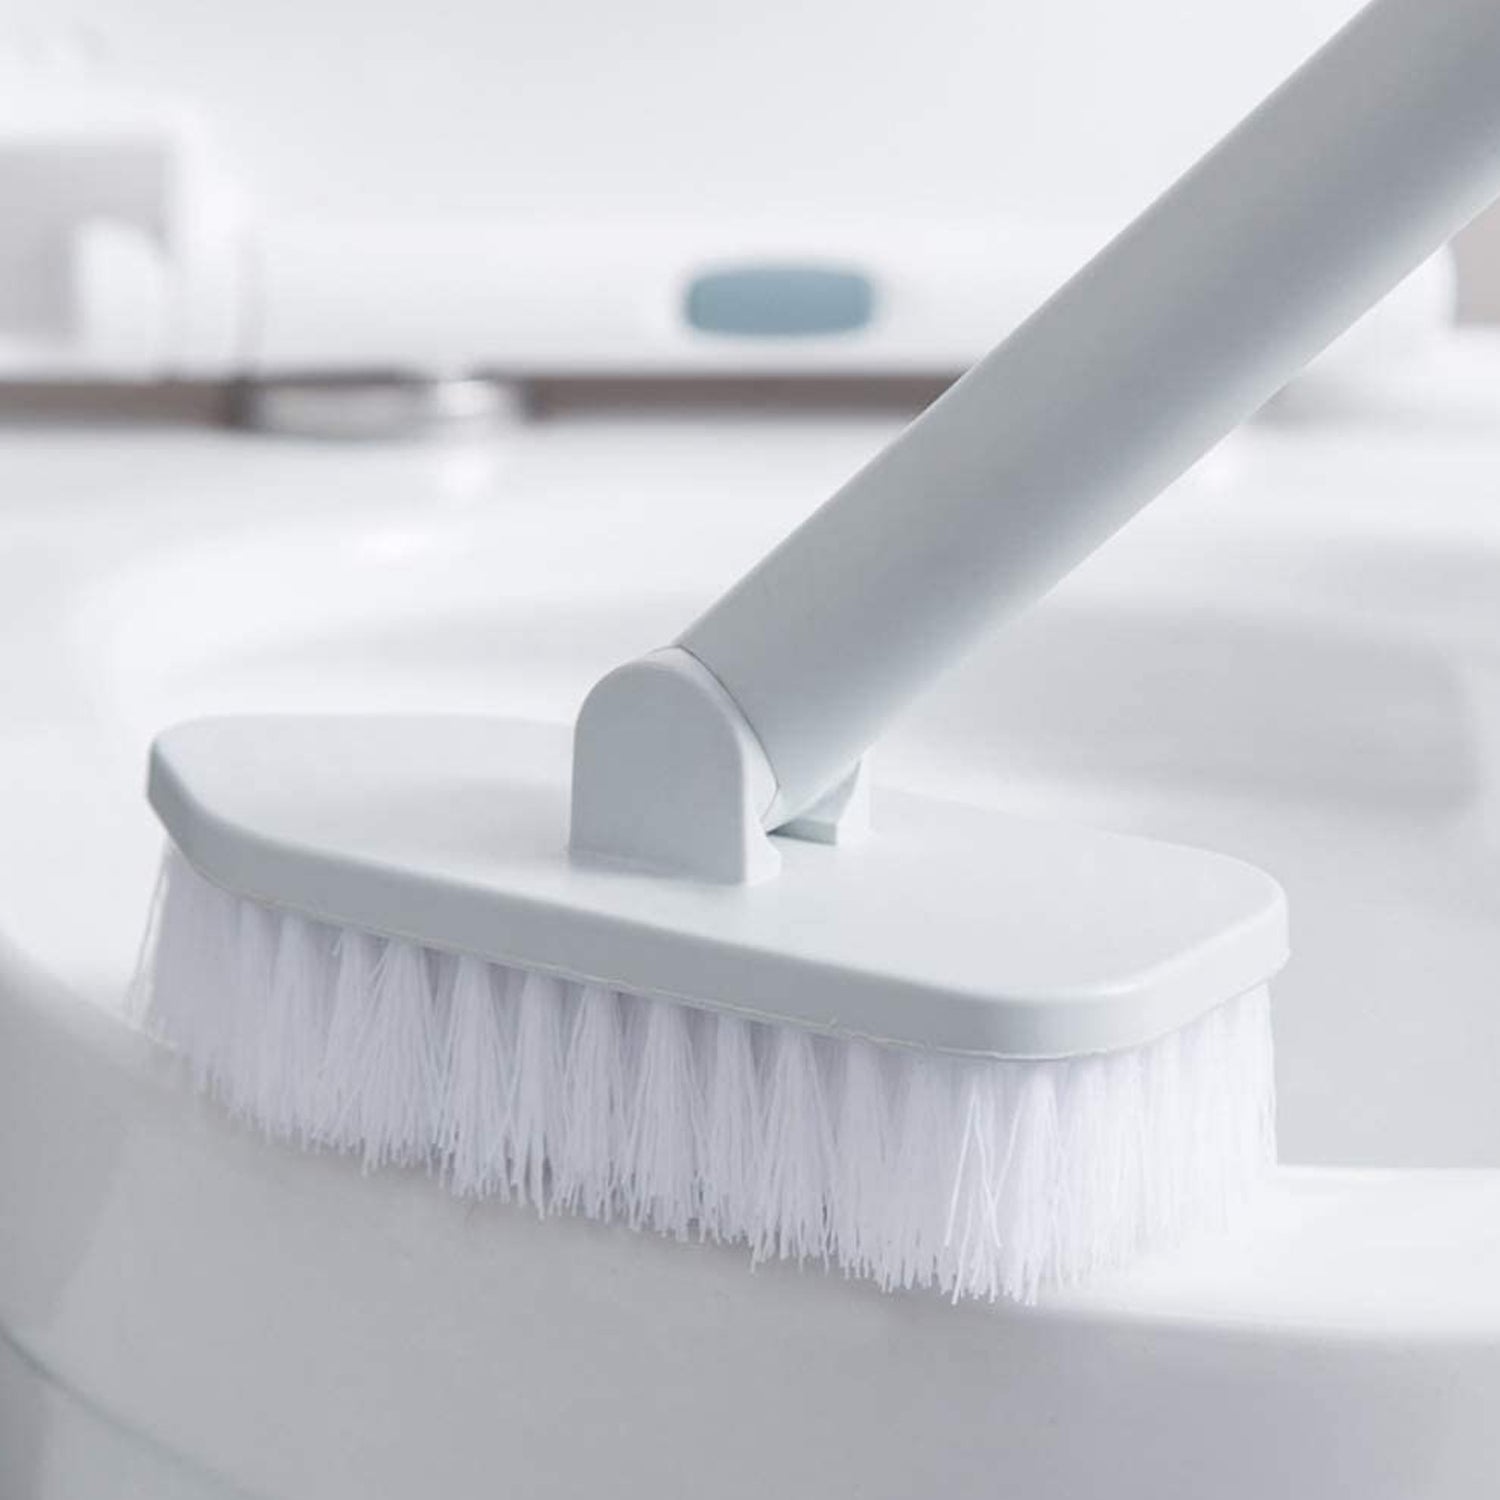 4075 Cleaning Brush 3in1 Multi Functional Brush Cleaning ,Scrubbing & Duster Brush For Home & Multiuse Brush DeoDap